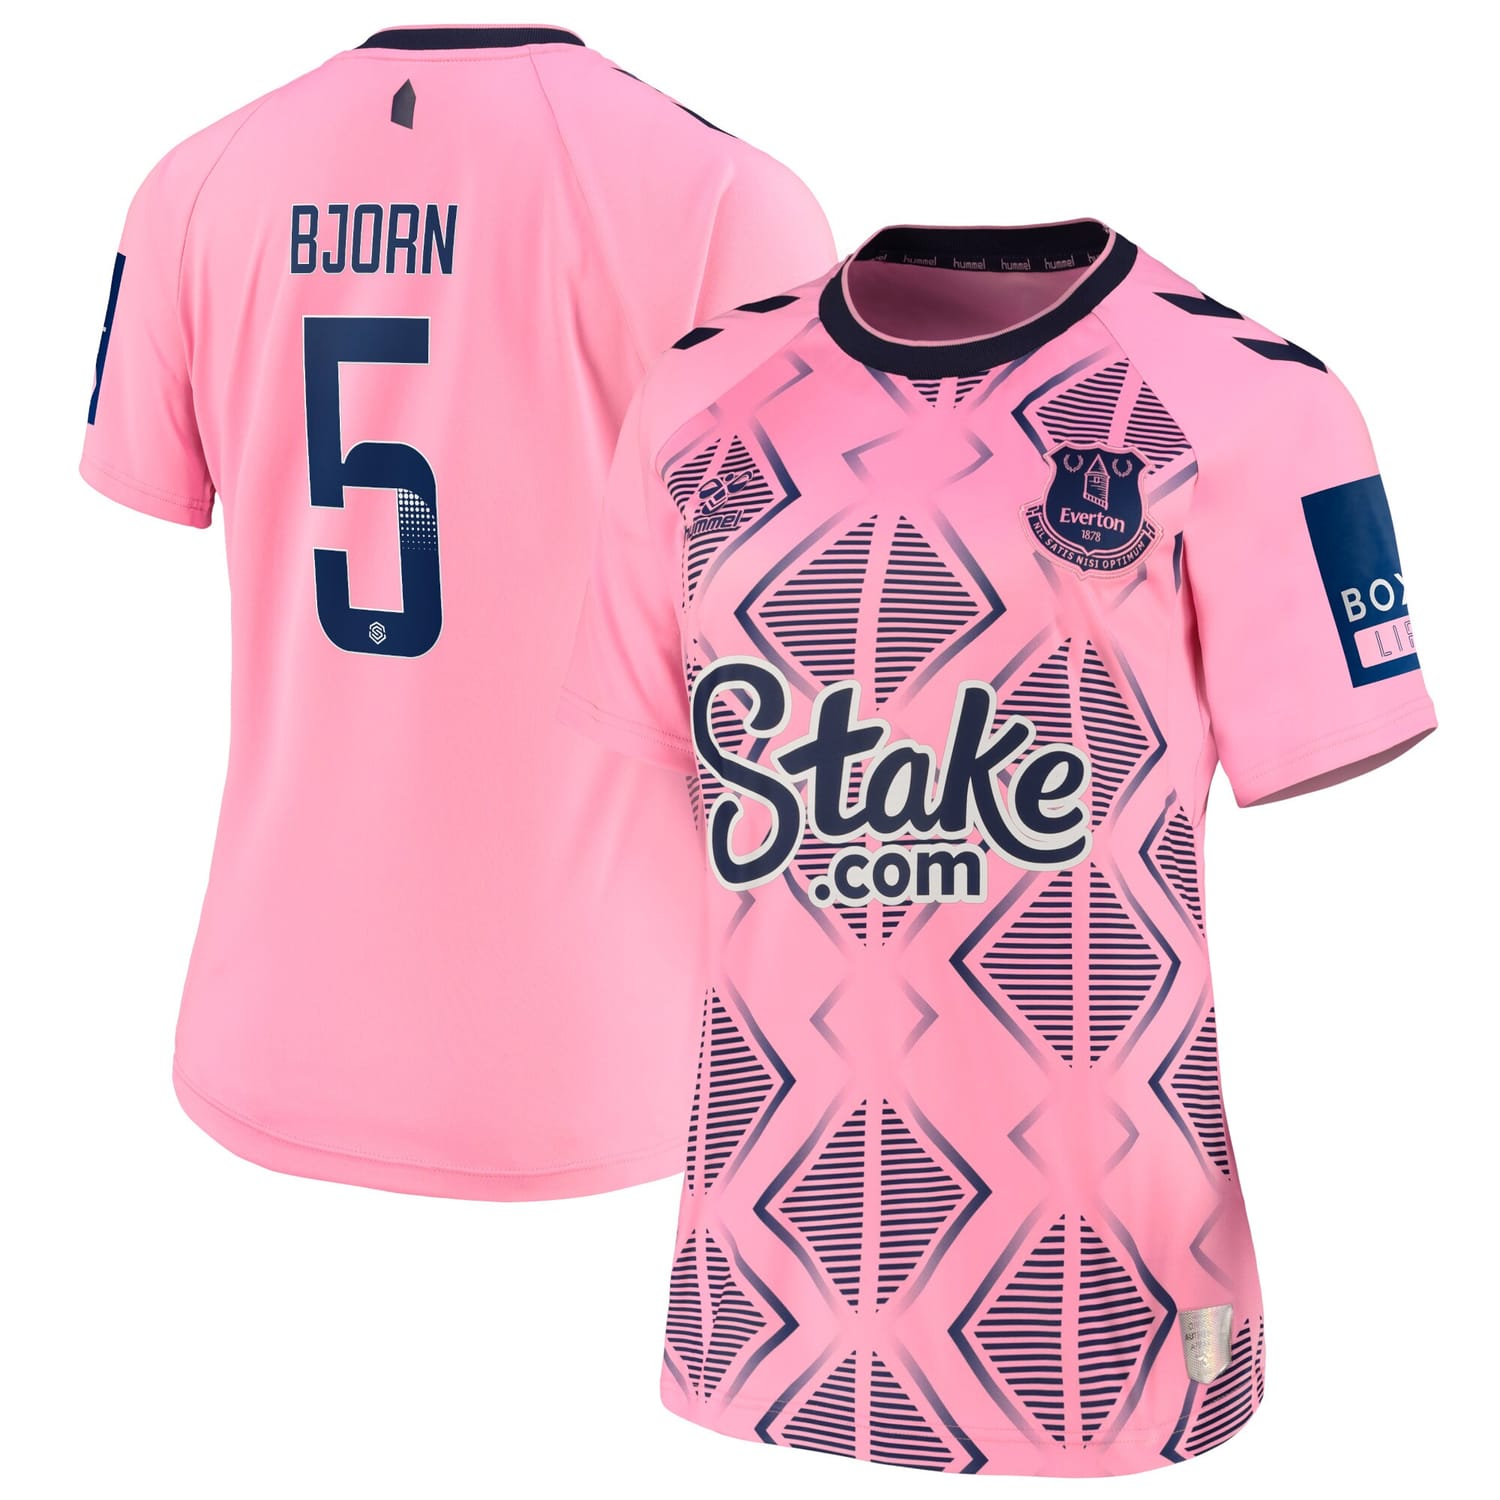 Premier League Everton Away Jersey Shirt 2022-23 player Nathalie Björn 5 printing for Women